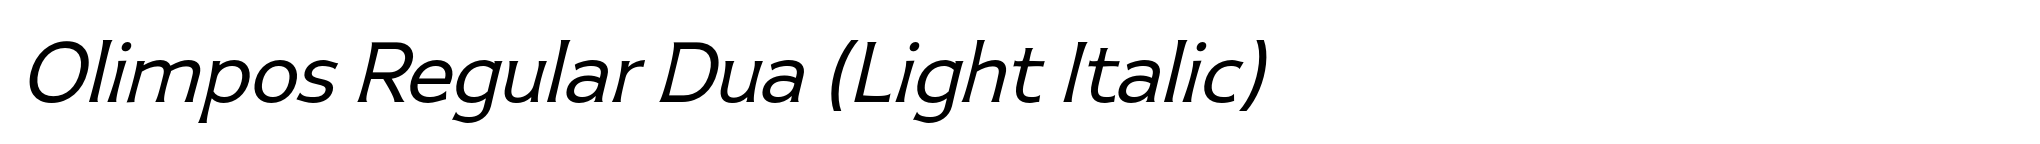 Olimpos Regular Dua (Light Italic) image